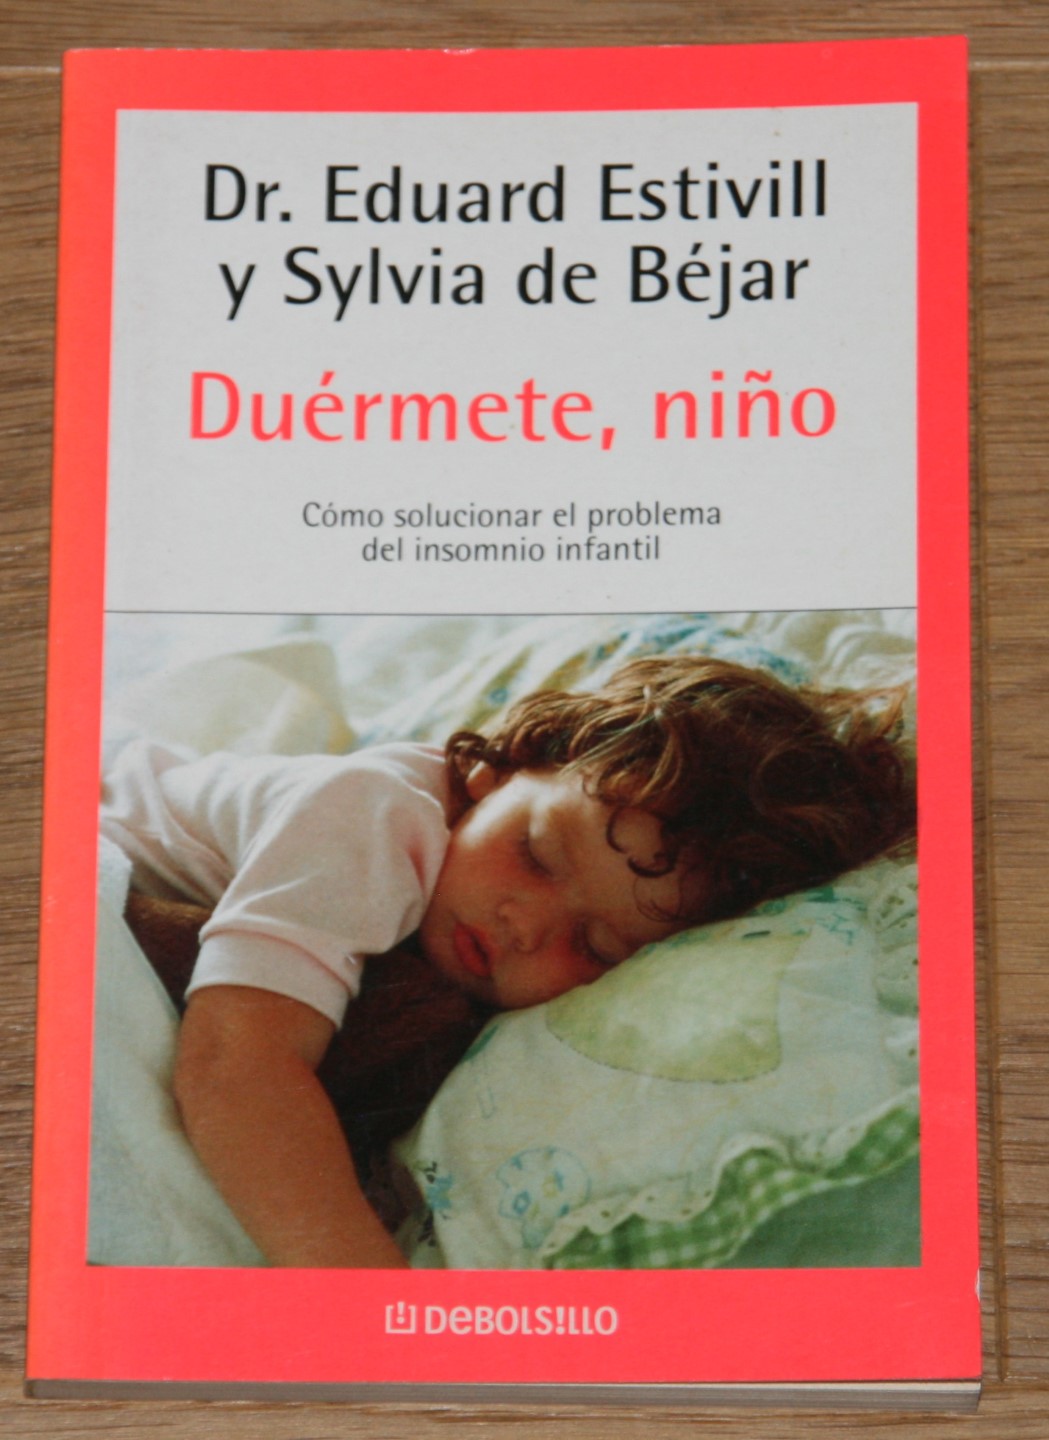 Duermete, nino. [Como solucionar el problema del insomnio infantil.], - Estivill, Dr. Eduard und Sylvia De Bejar